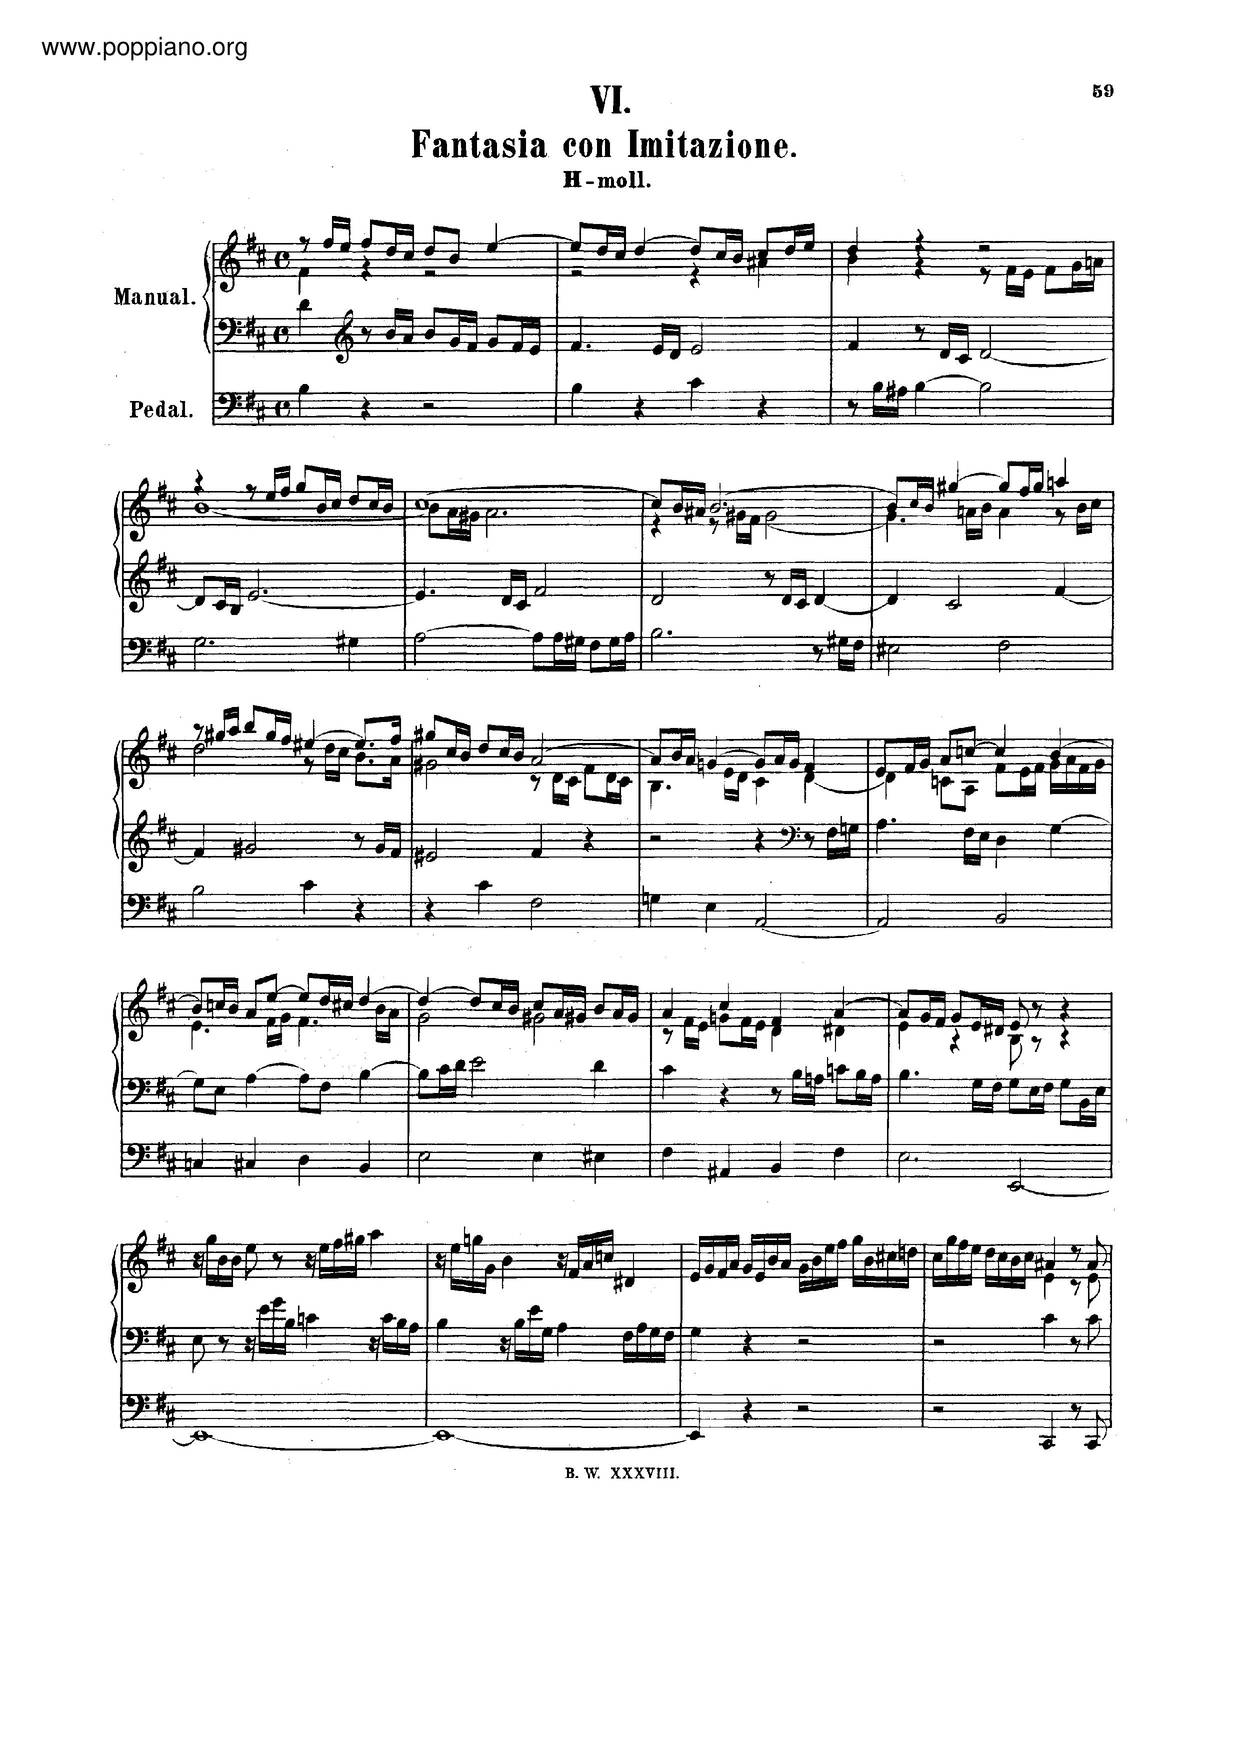 Fantasia And Imitation In B Minor, BWV 563 Score